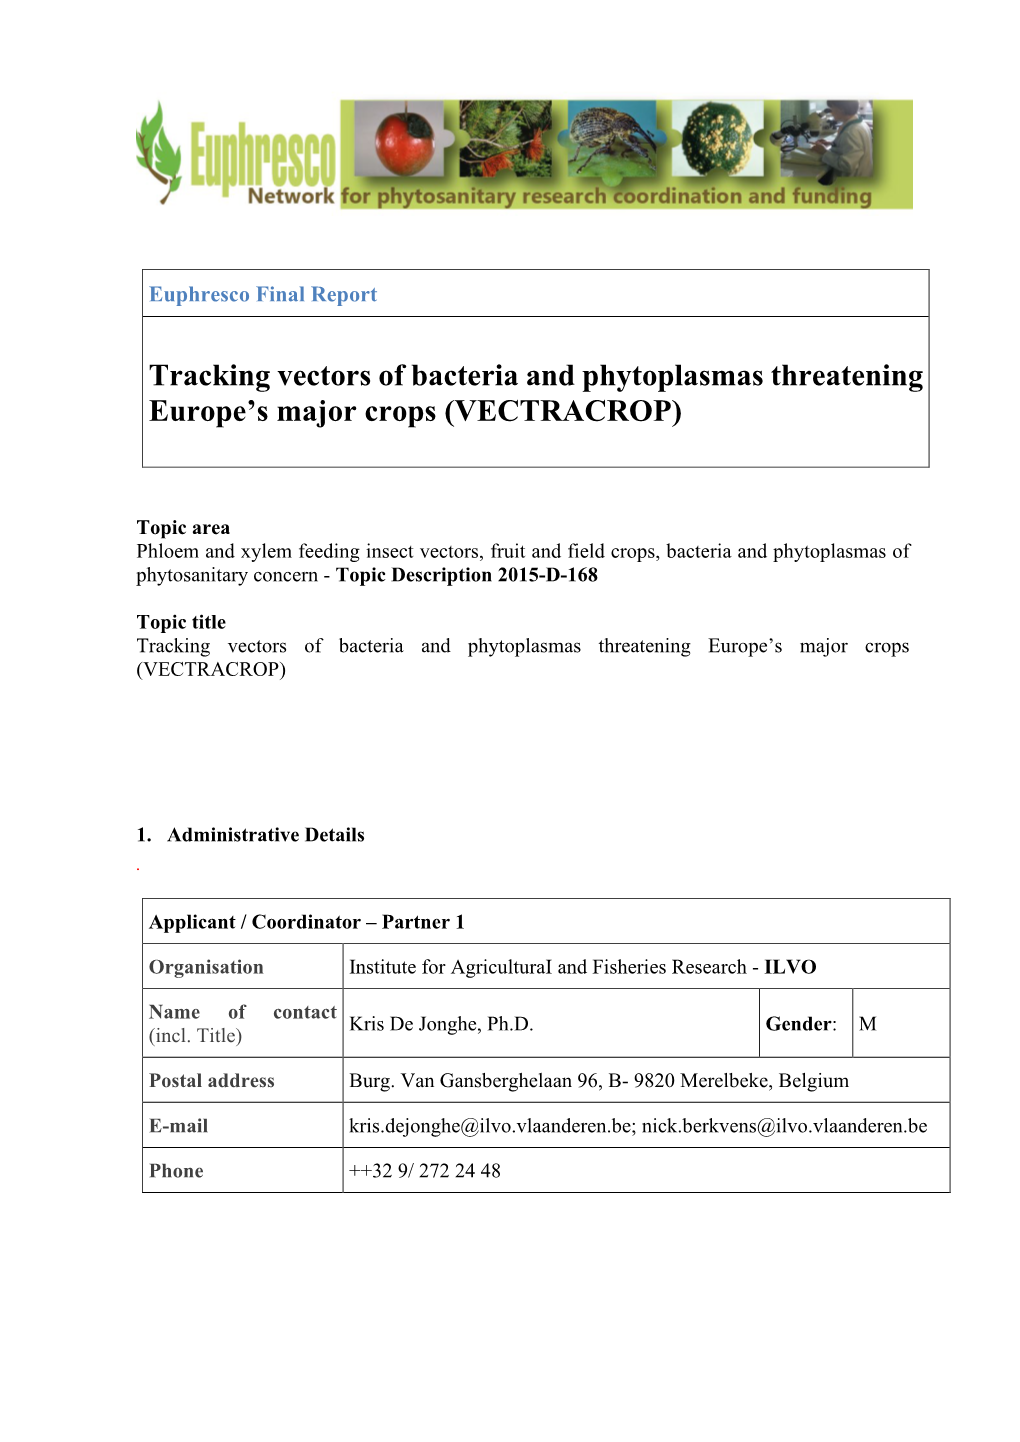 Tracking Vectors of Bacteria and Phytoplasmas Threatening Europe’S Major Crops (VECTRACROP)